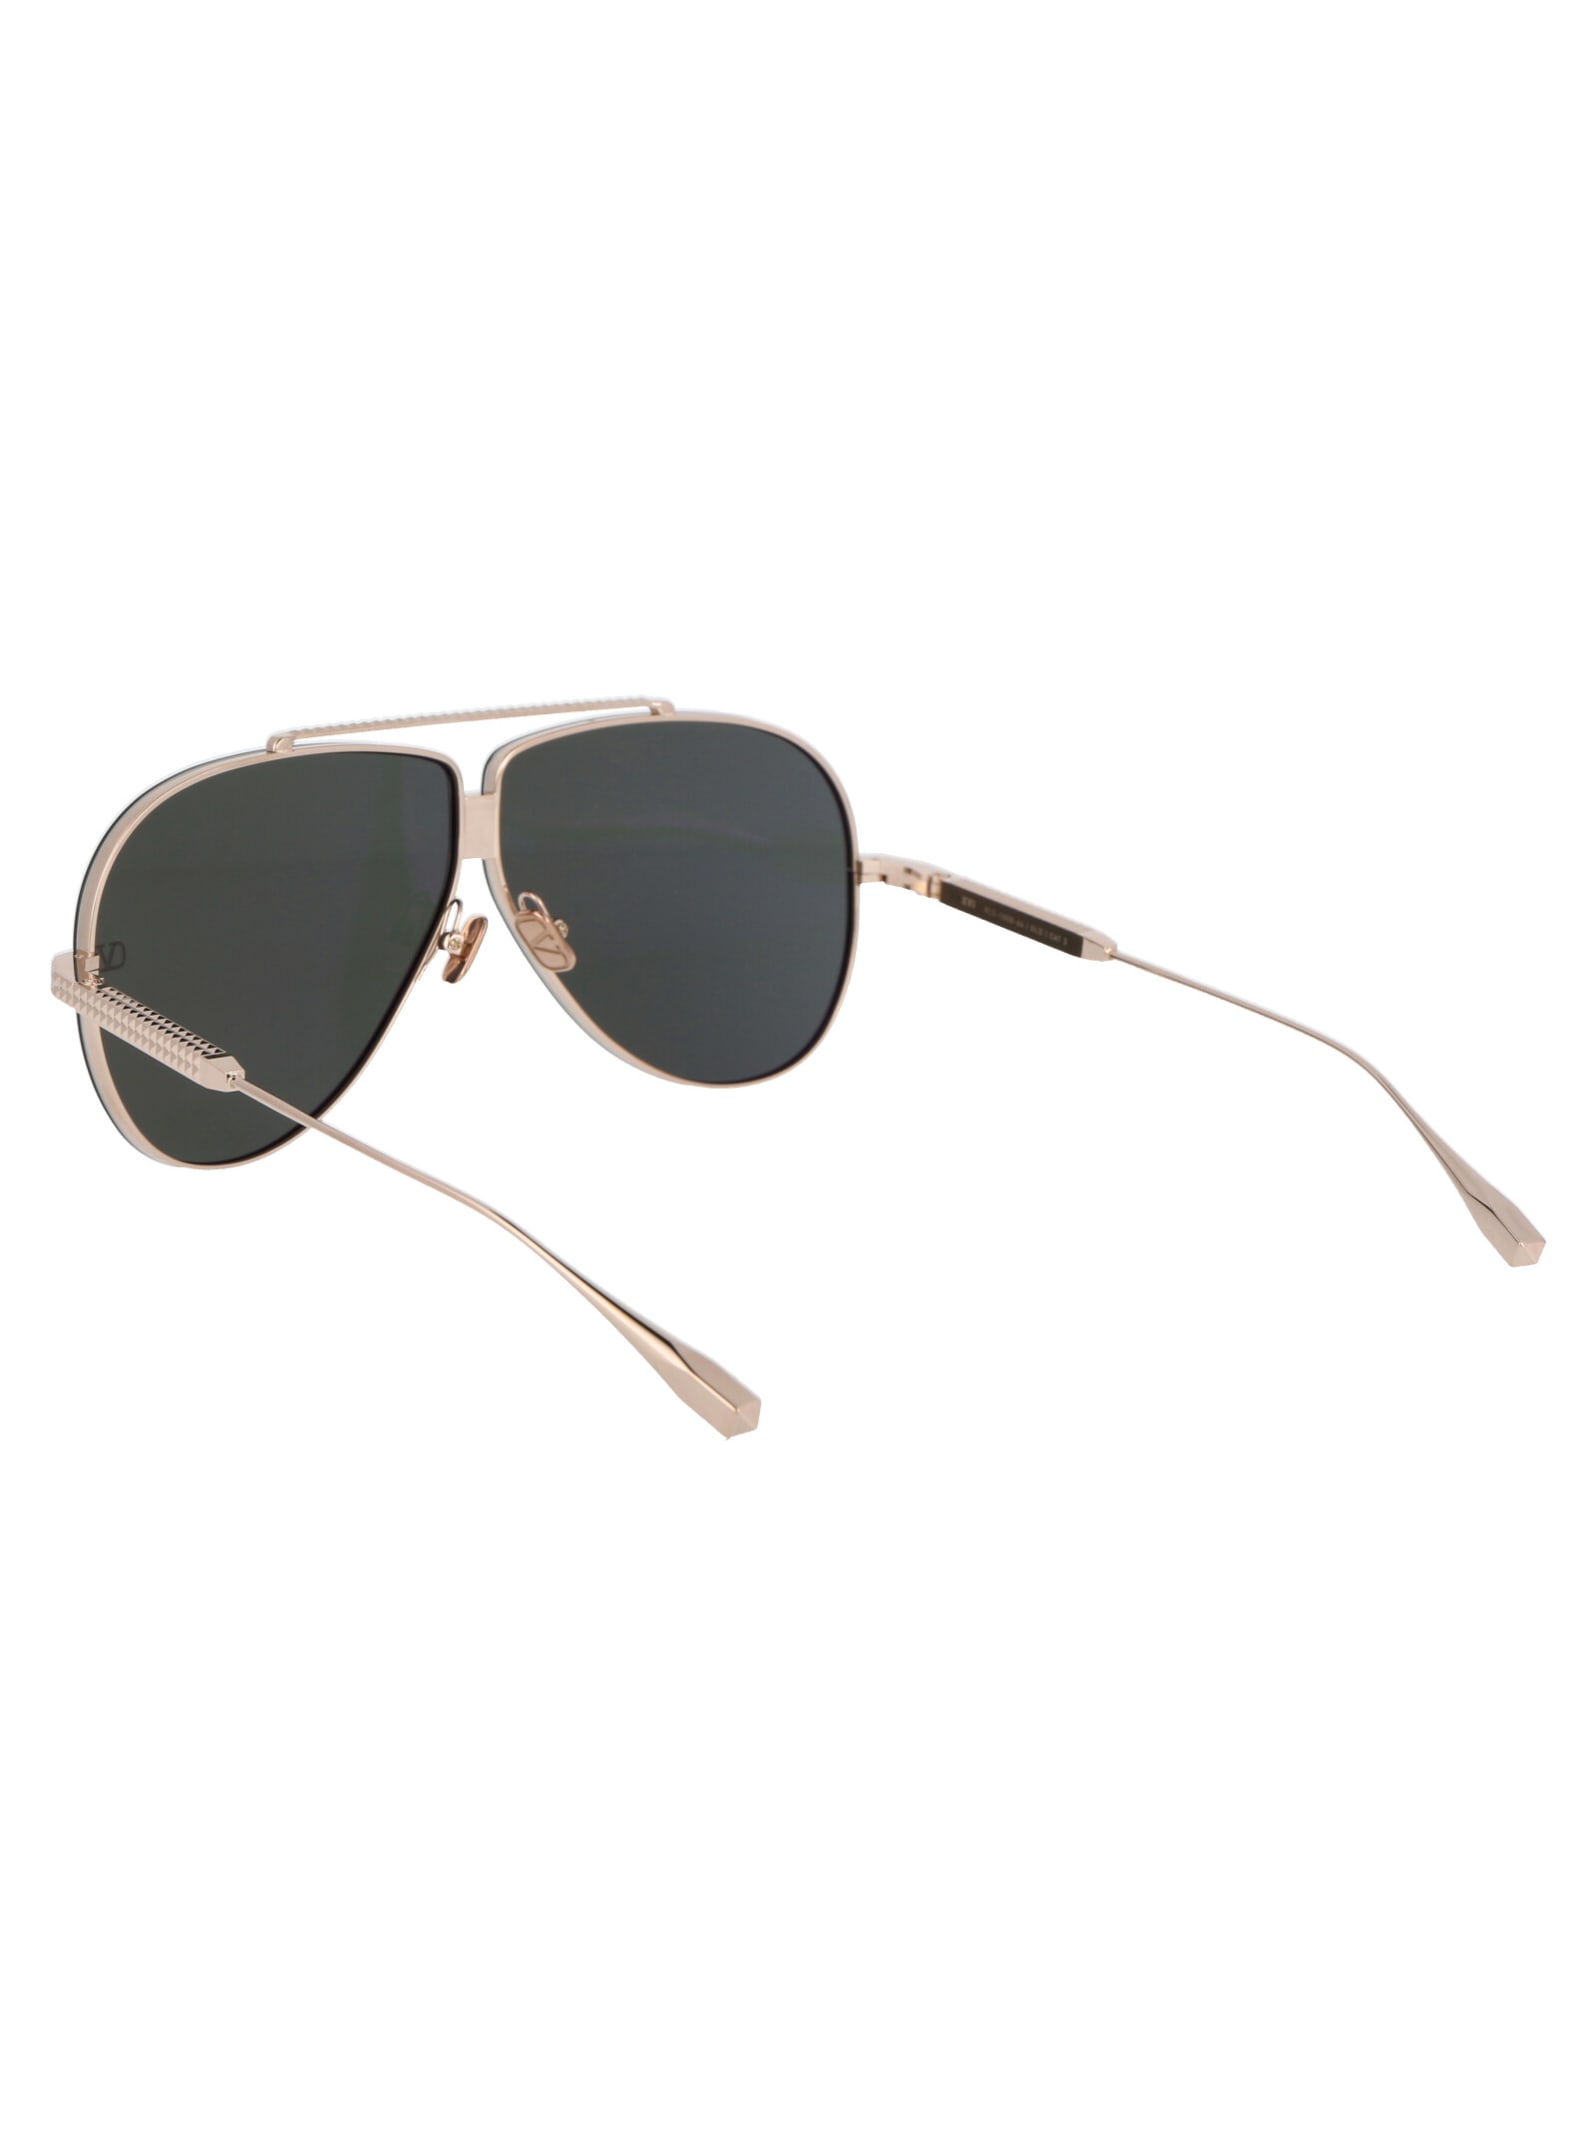 Shop Valentino Xvi Sunglasses In White Gold W/ G-15 Gold Flash Mirror